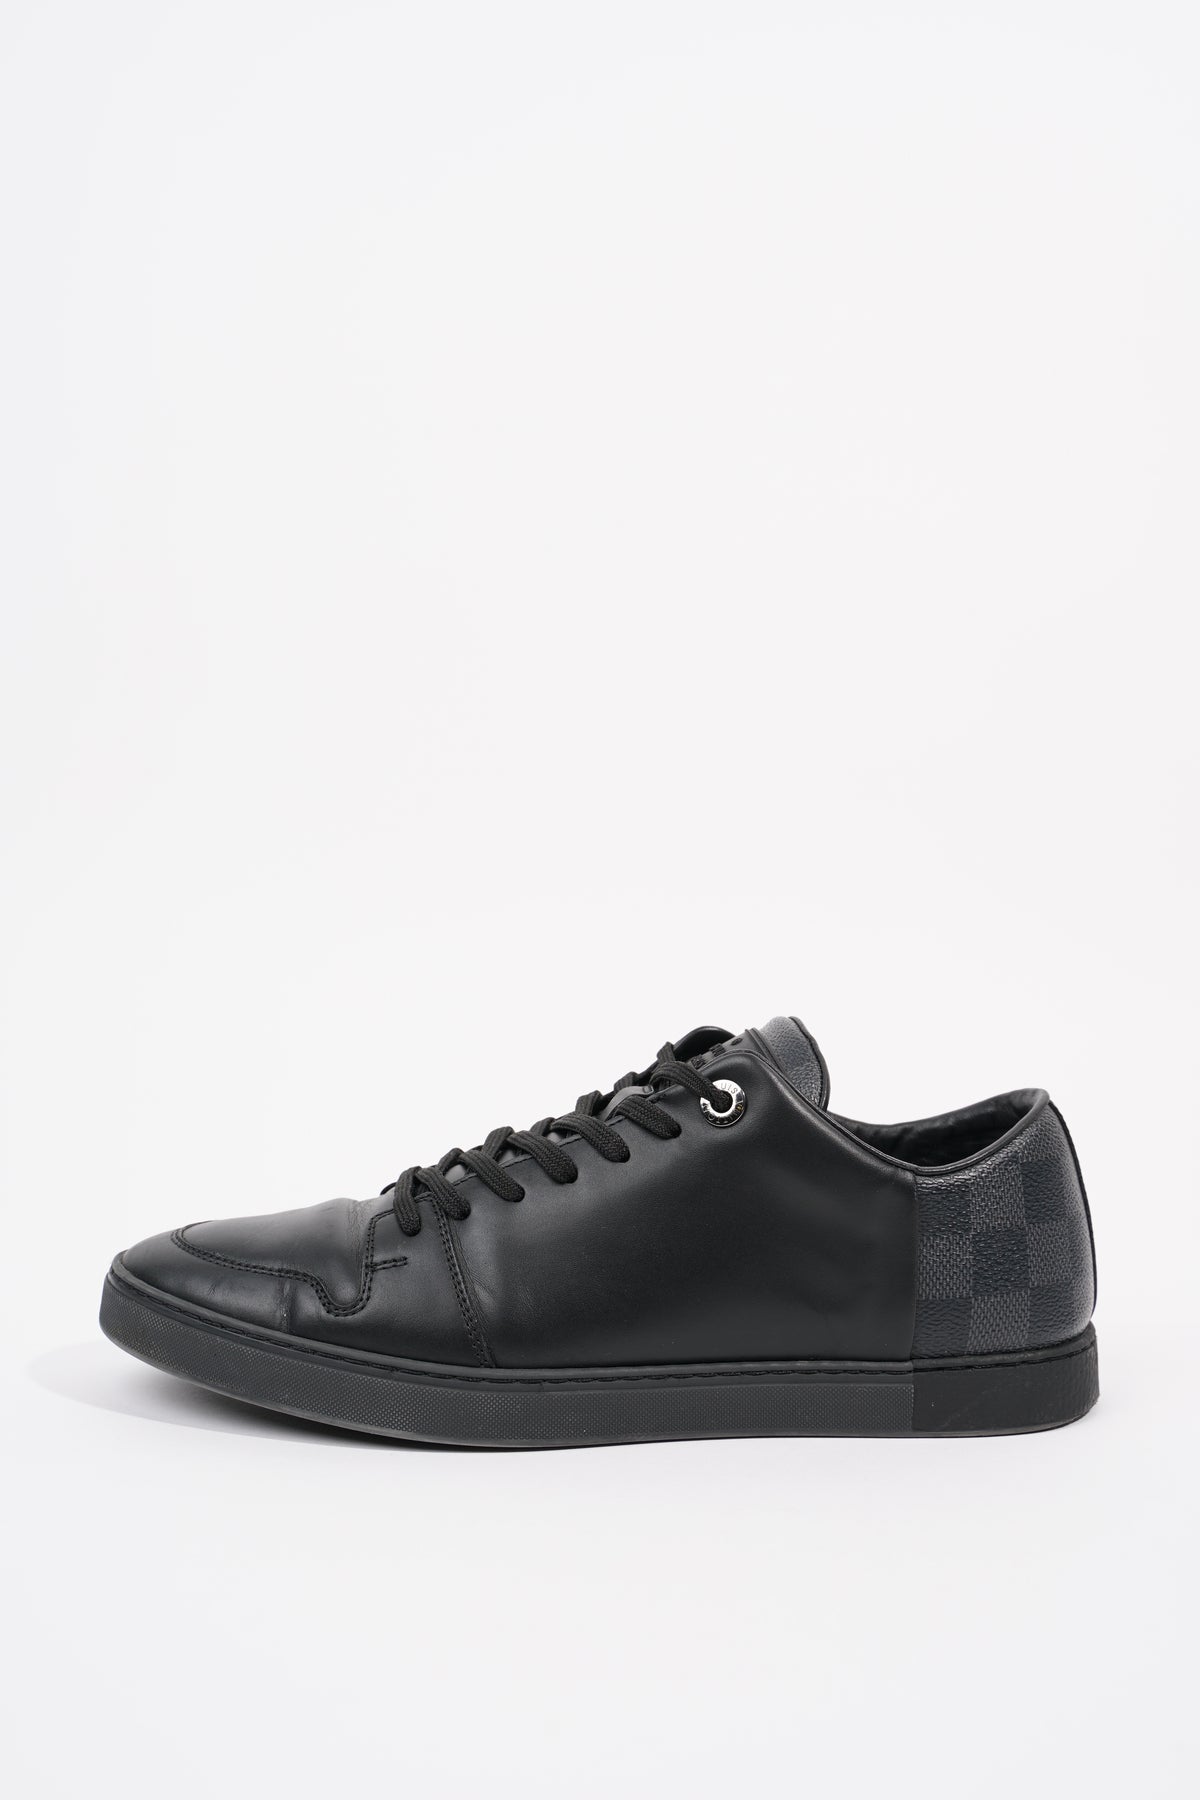 Louis Vuitton, Shoes, Pre Owned Louis Vuitton Sneakers Size 7 2